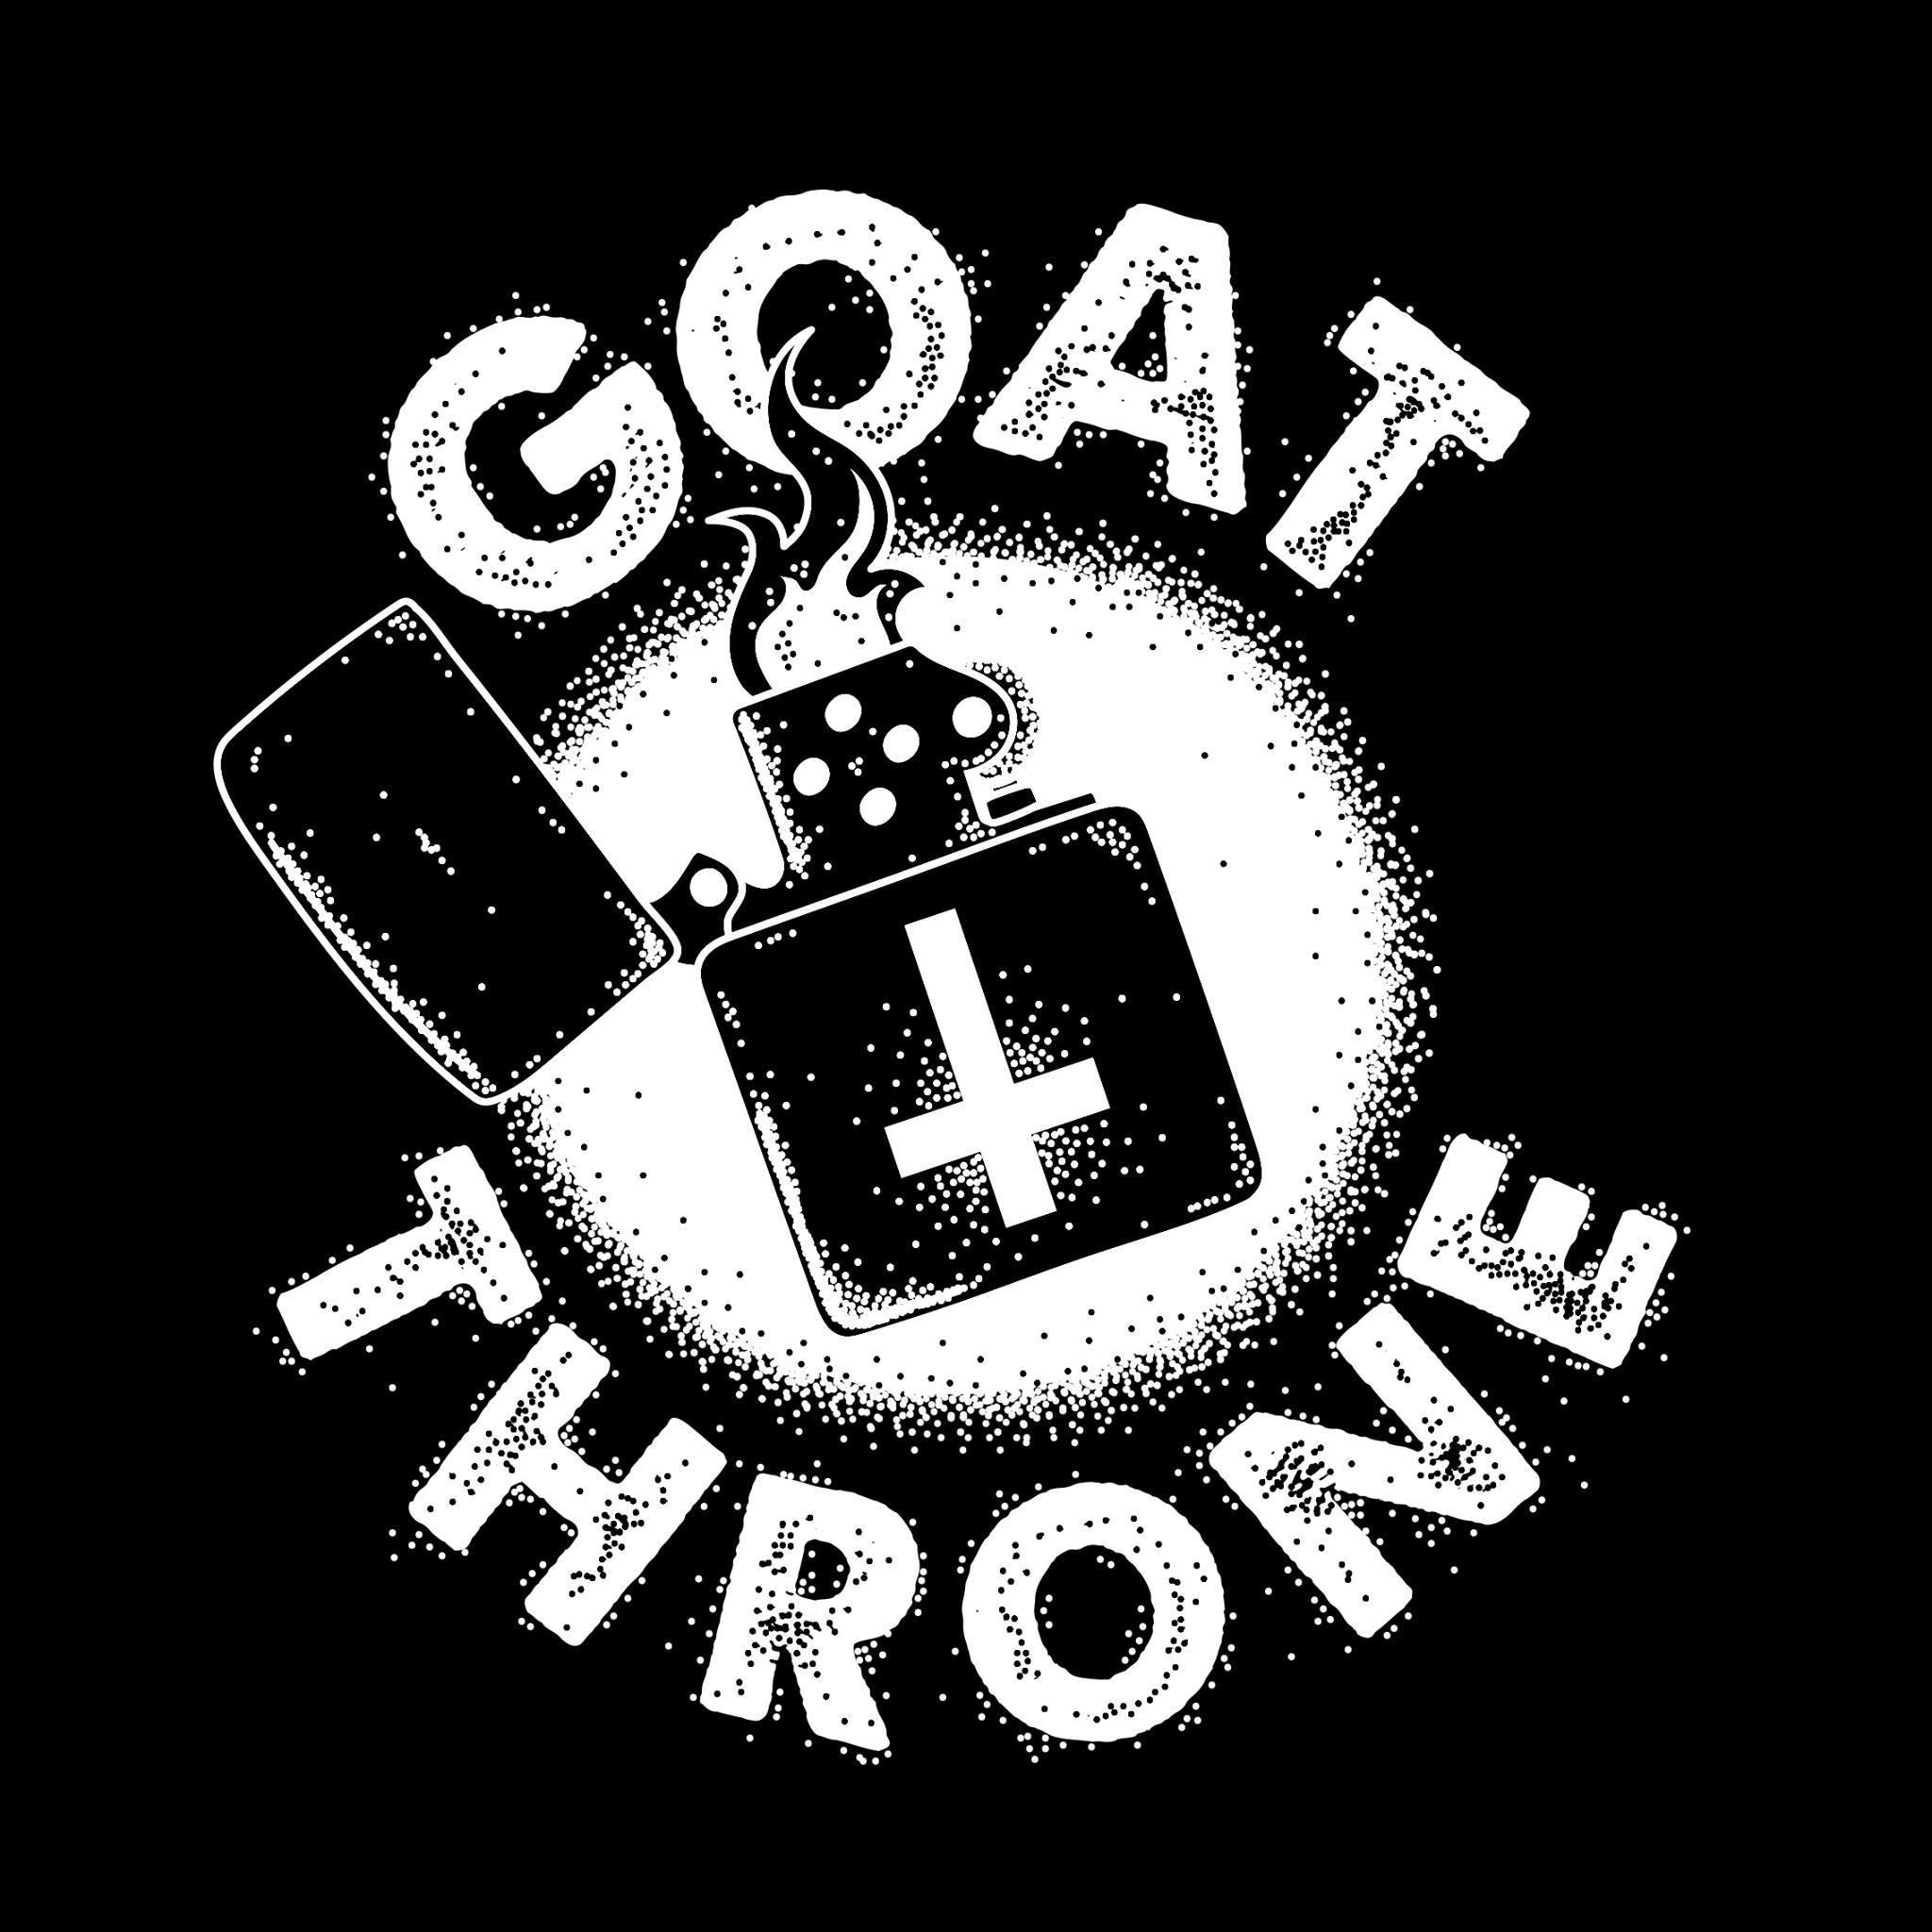 Goat Throne